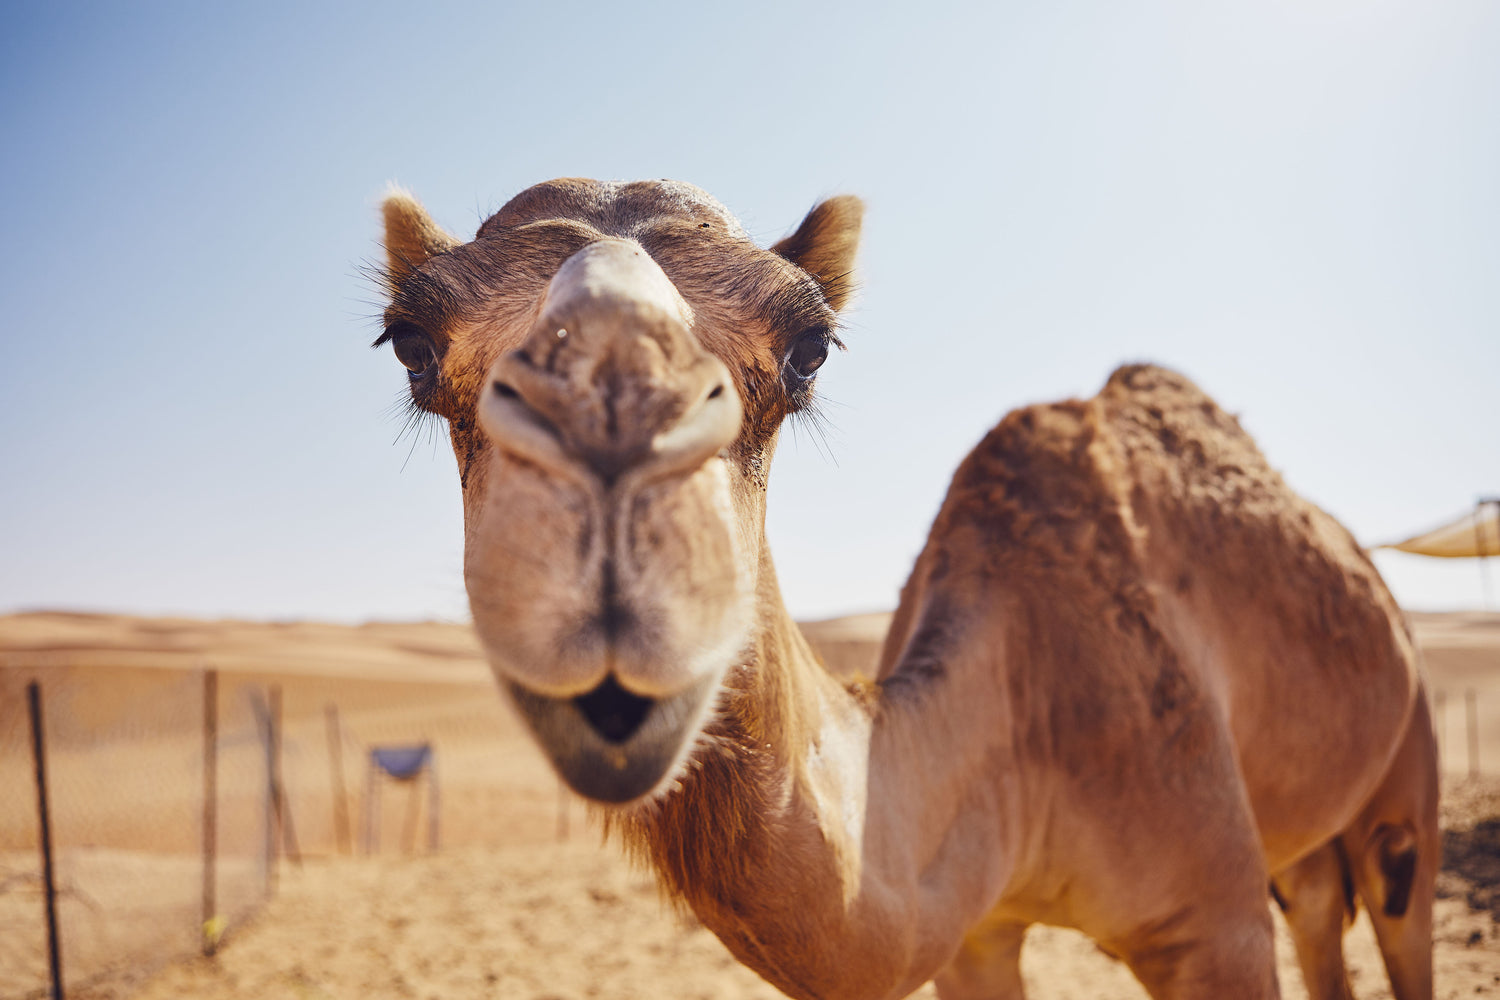 Camel smiling with camel milk